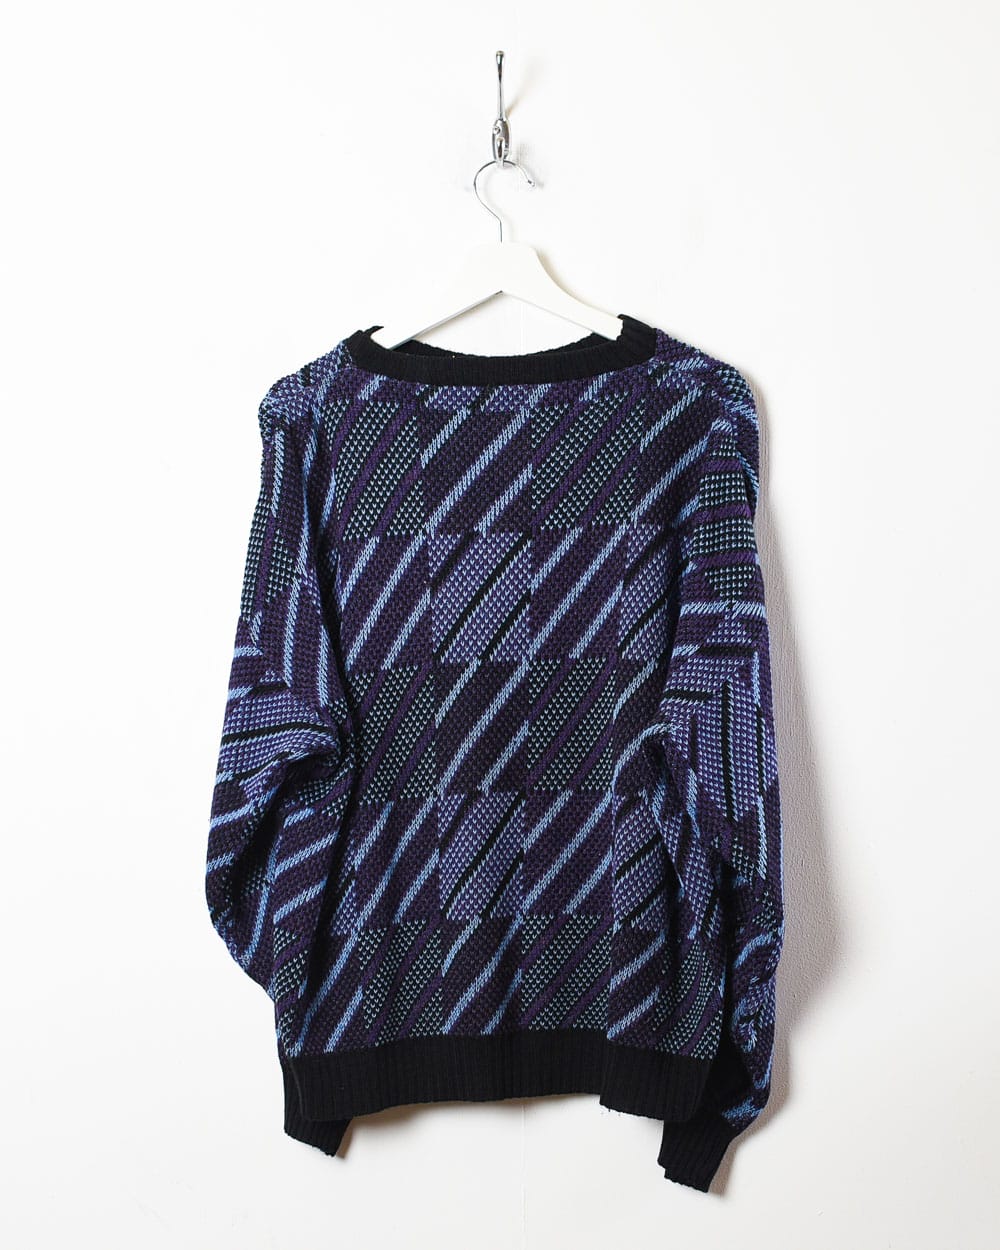 Purple Hugo Boss Patterned Knitted Sweatshirt - Medium